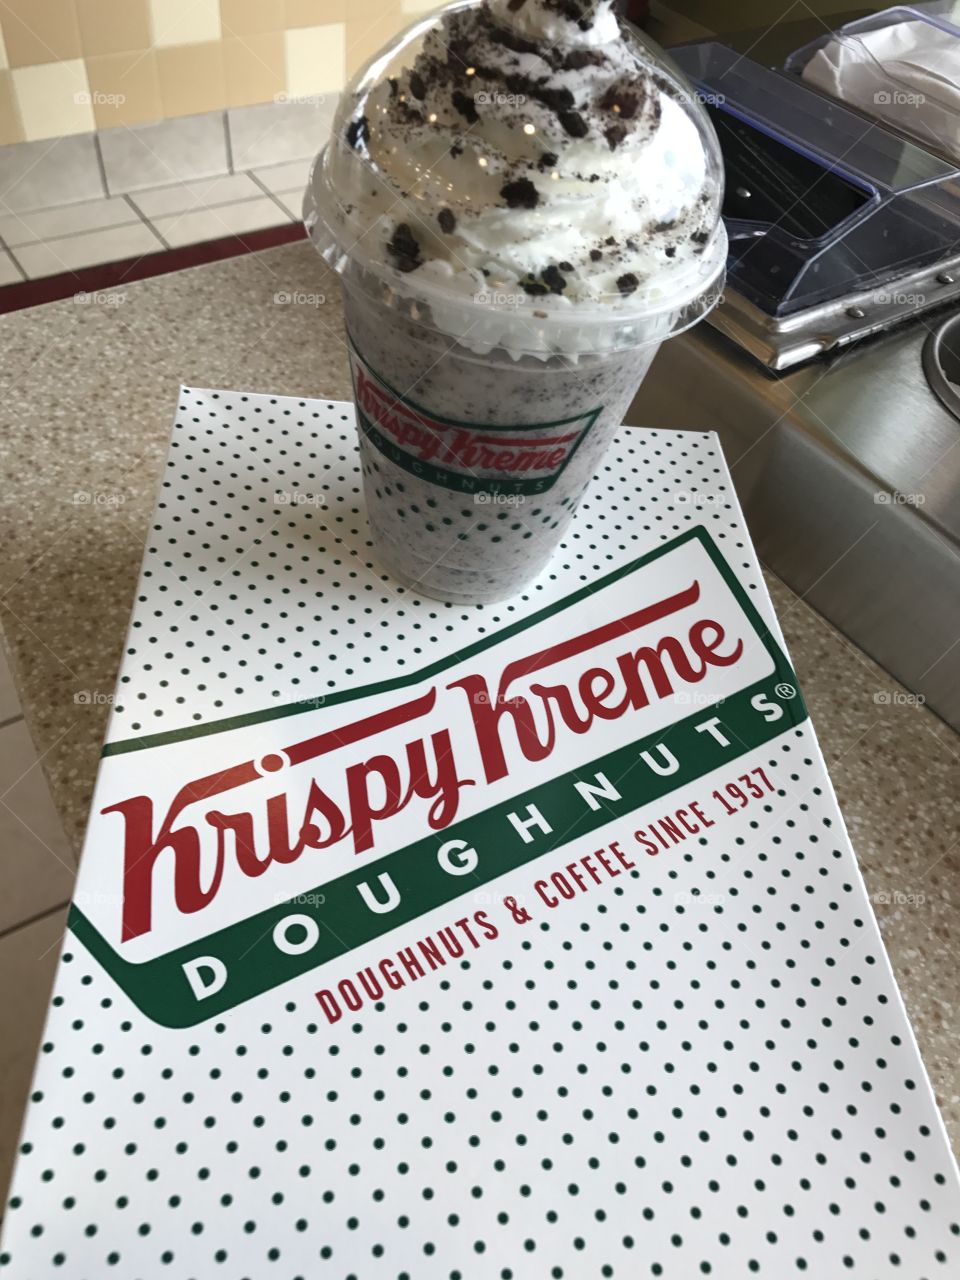 Krispy Kreme coffee and donuts 